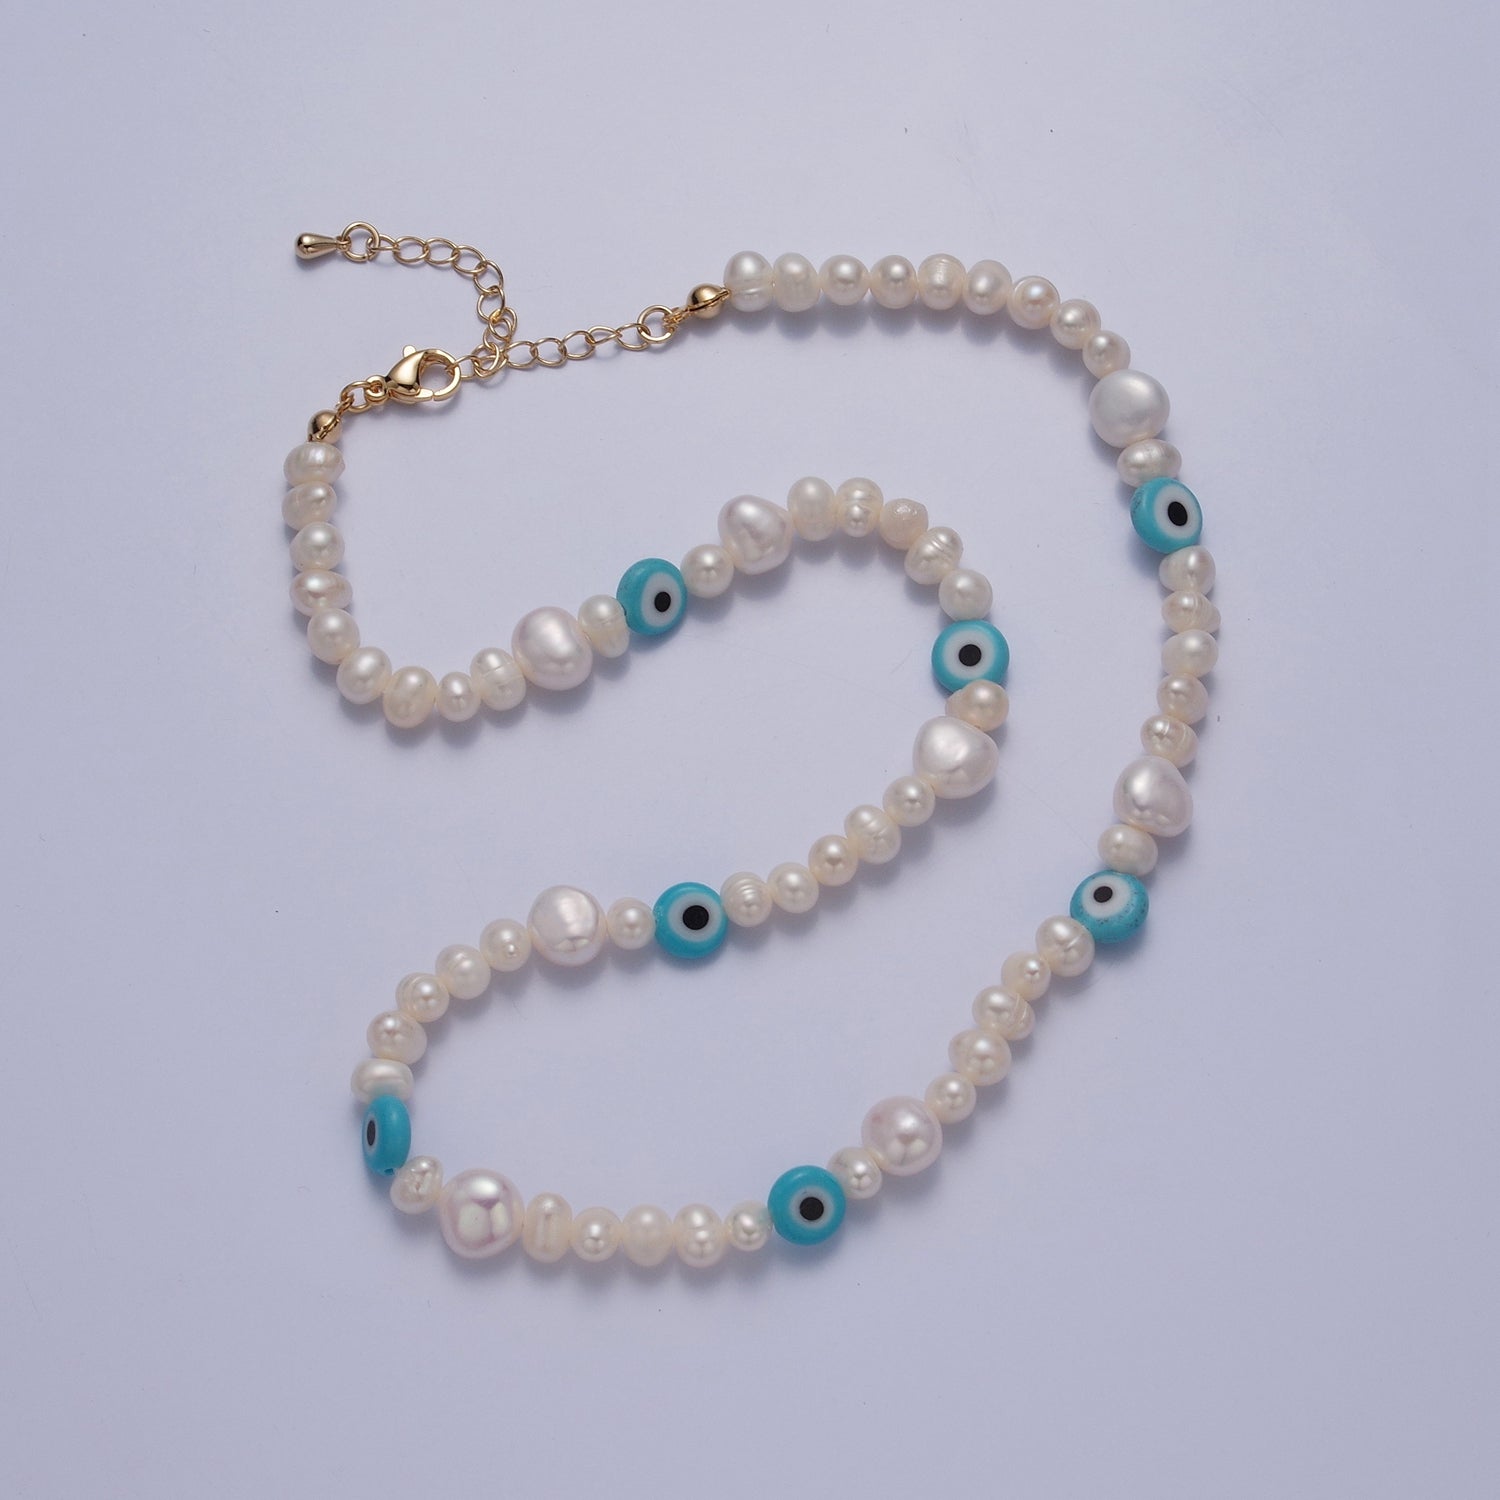 Baby Blue Evil Eye Beaded Choker Necklace for Women Freshwater Pearl Choker Necklace Boho Handmade 18K Gold Filled Y2K Jewelry WA-1026 - DLUXCA